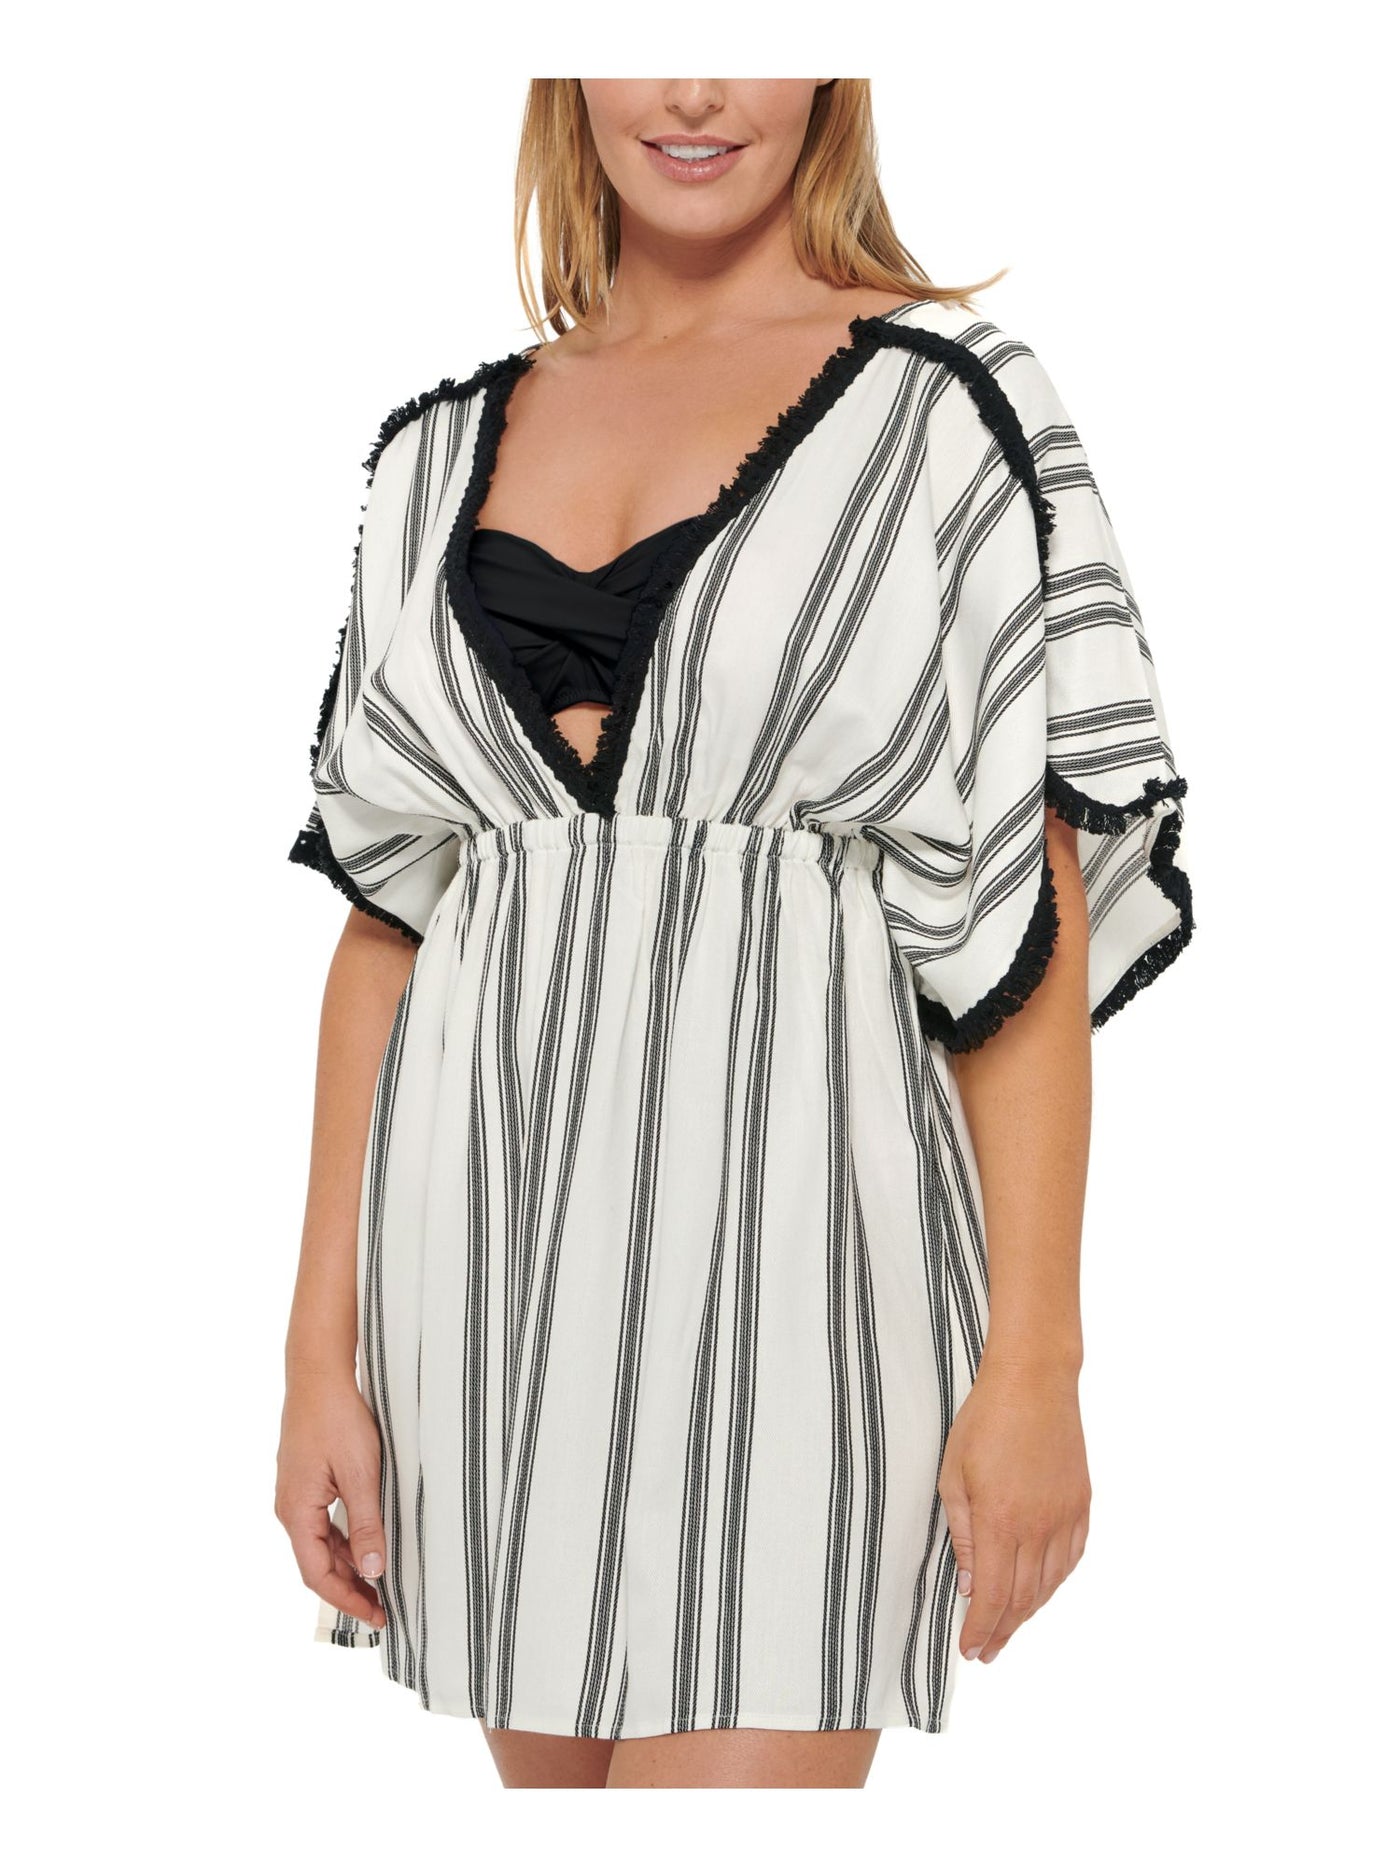 DOTTI Women's White Striped Fringed-Trim Dress Deep V Neck Tie Newport Swimsuit Cover Up M